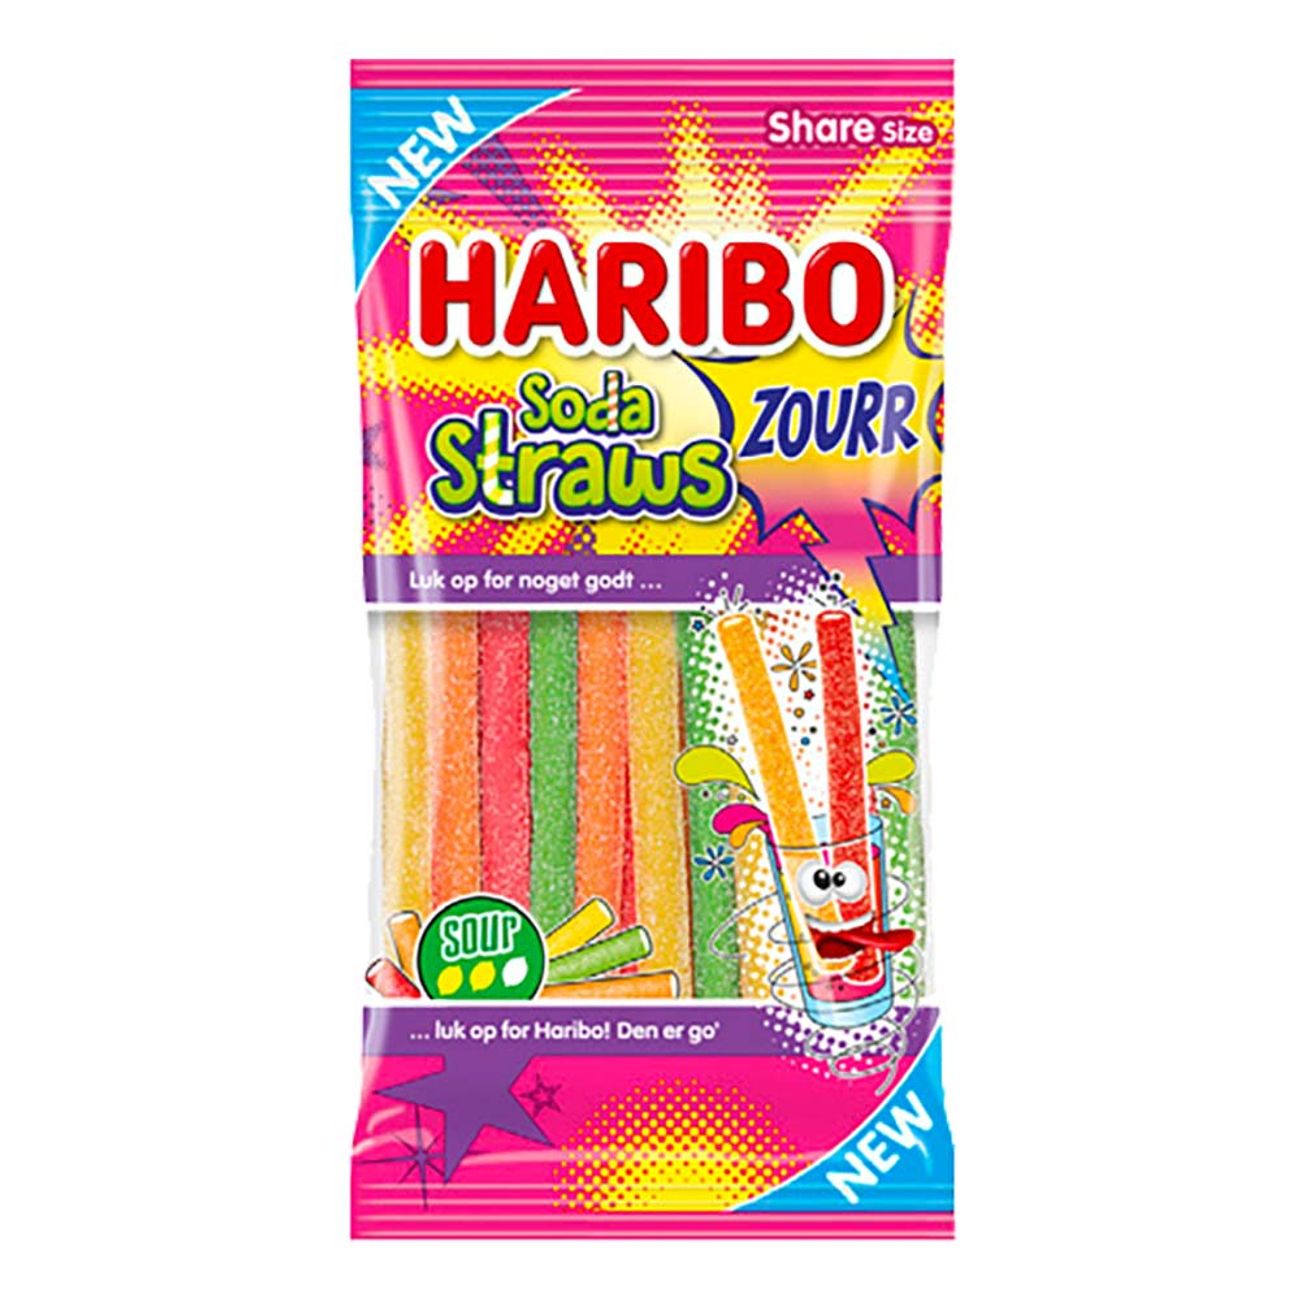 haribo-soda-straws-zourr-94928-1